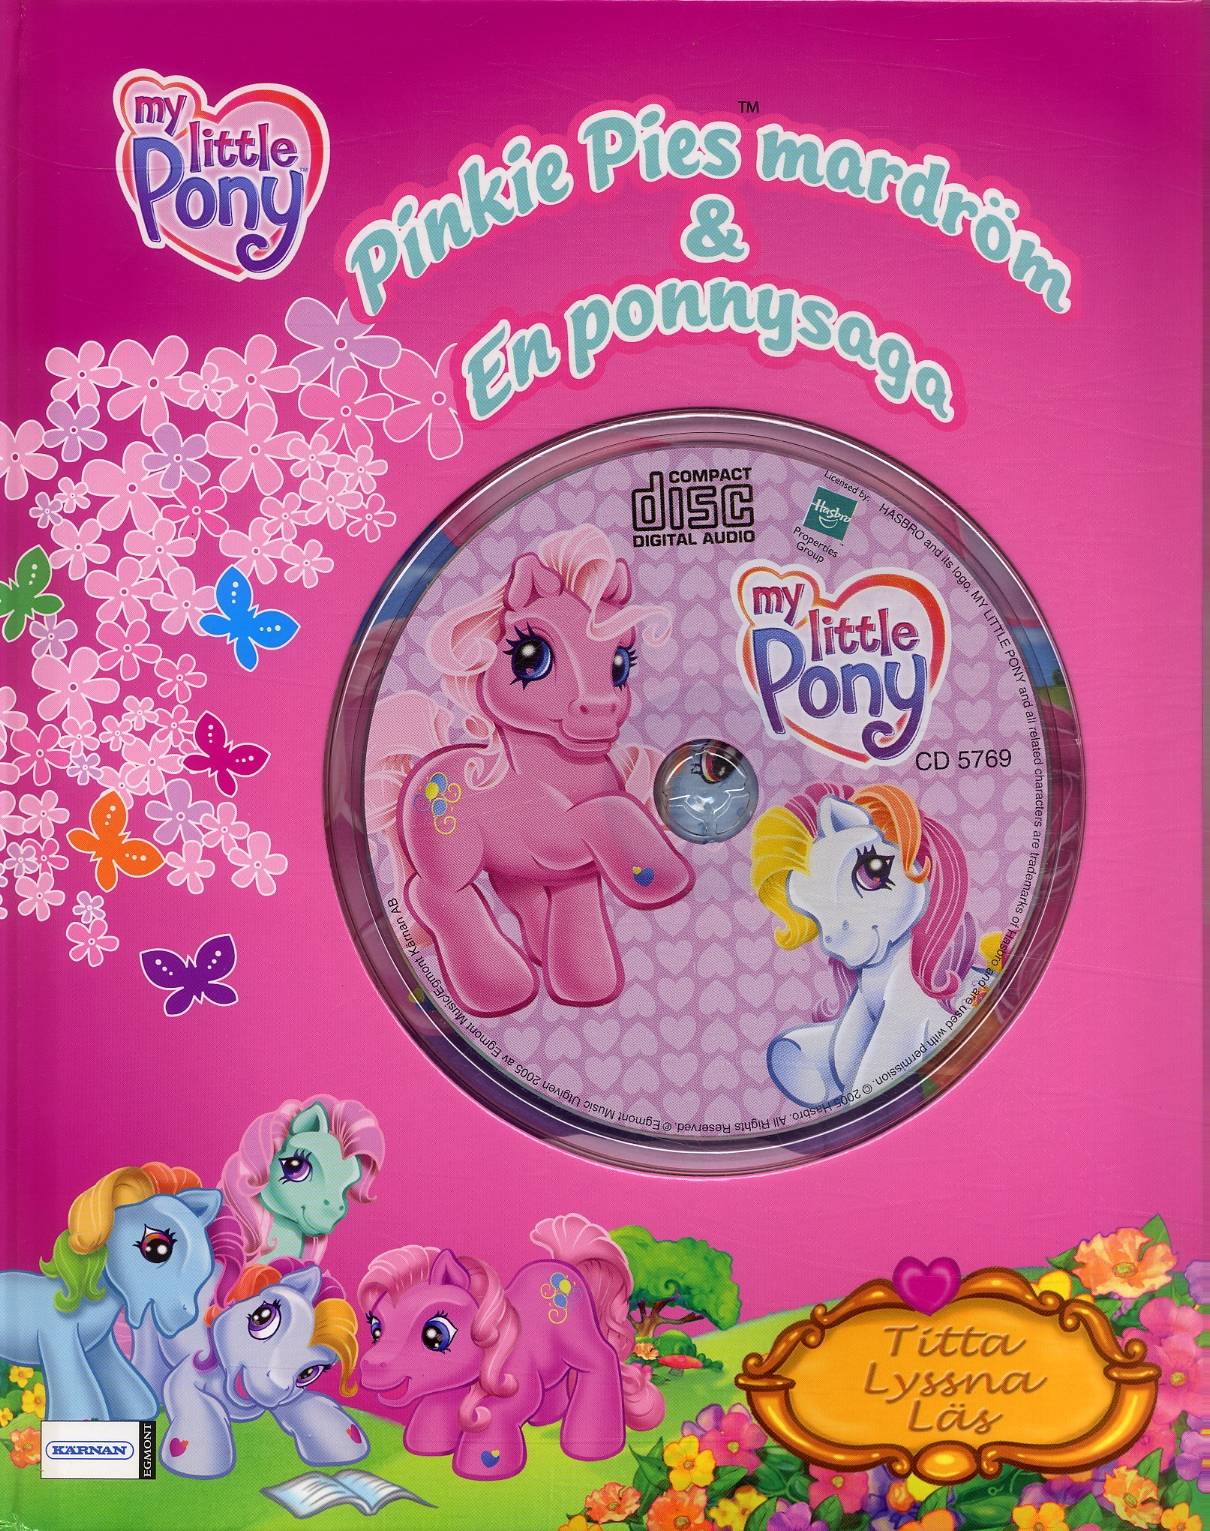 My Little Pony bok med CD - Pinky Pies mardröm & En ponnysaga